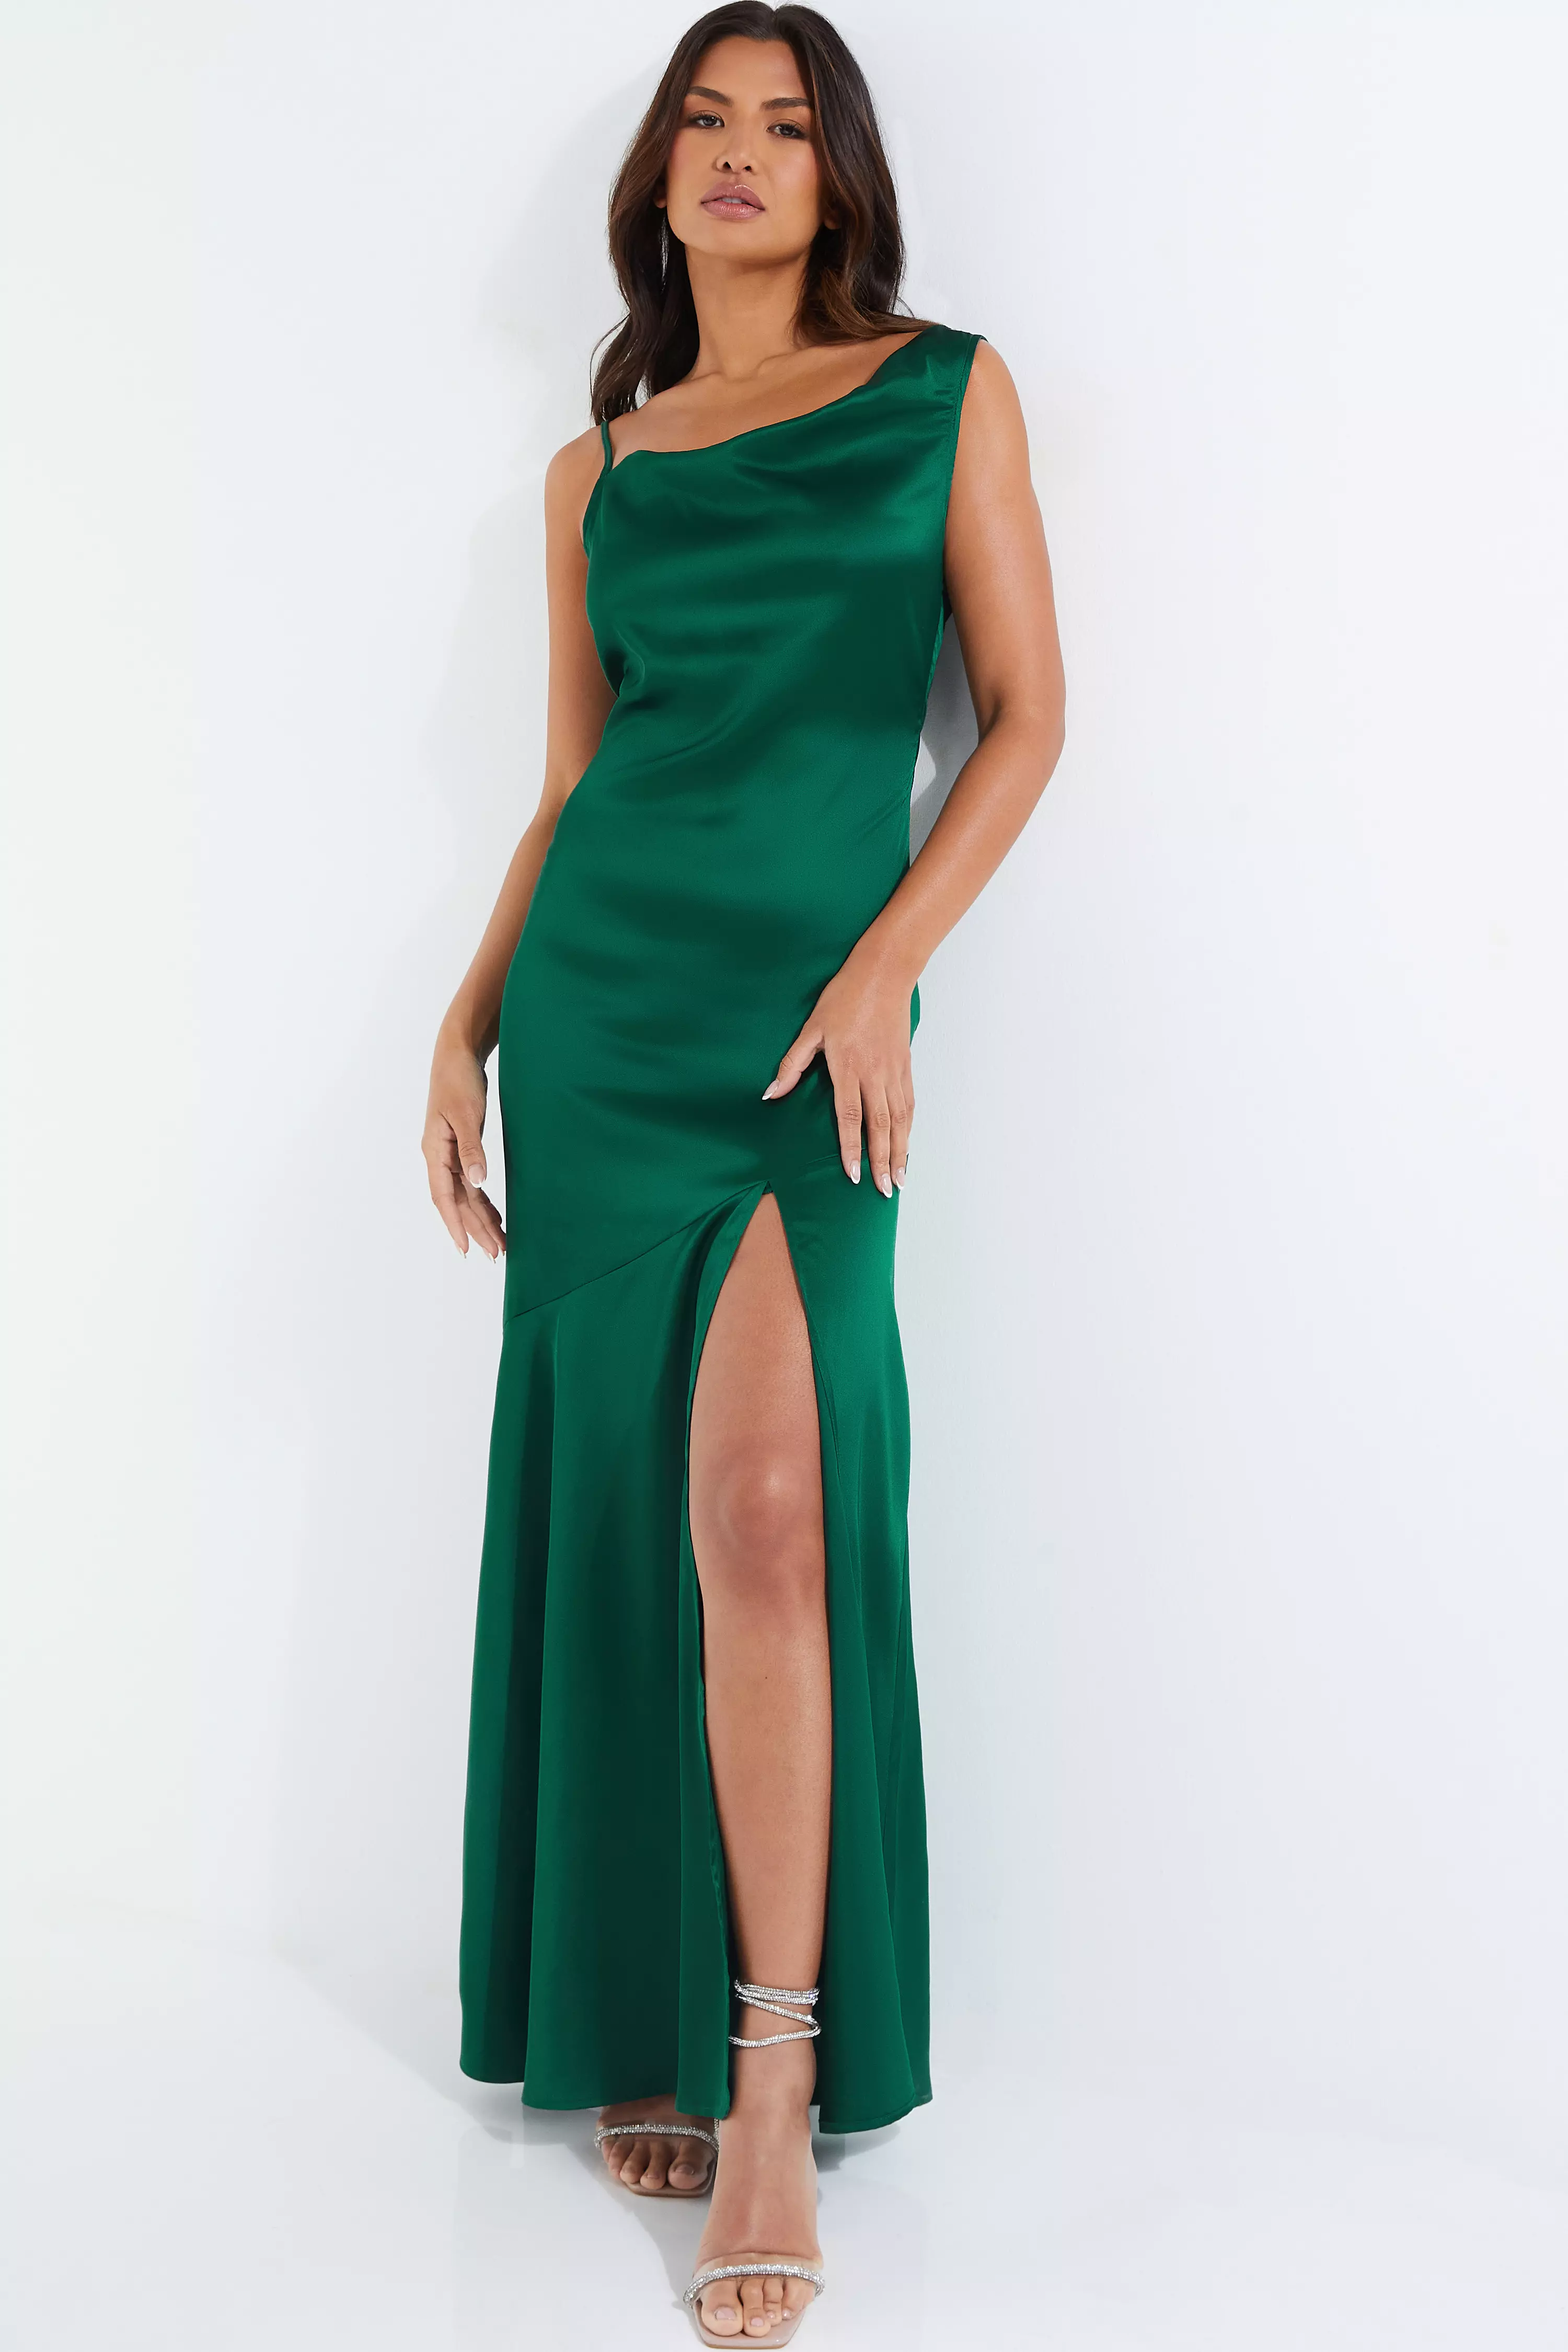 Bottle Green Satin Maxi Dress - QUIZ Clothing